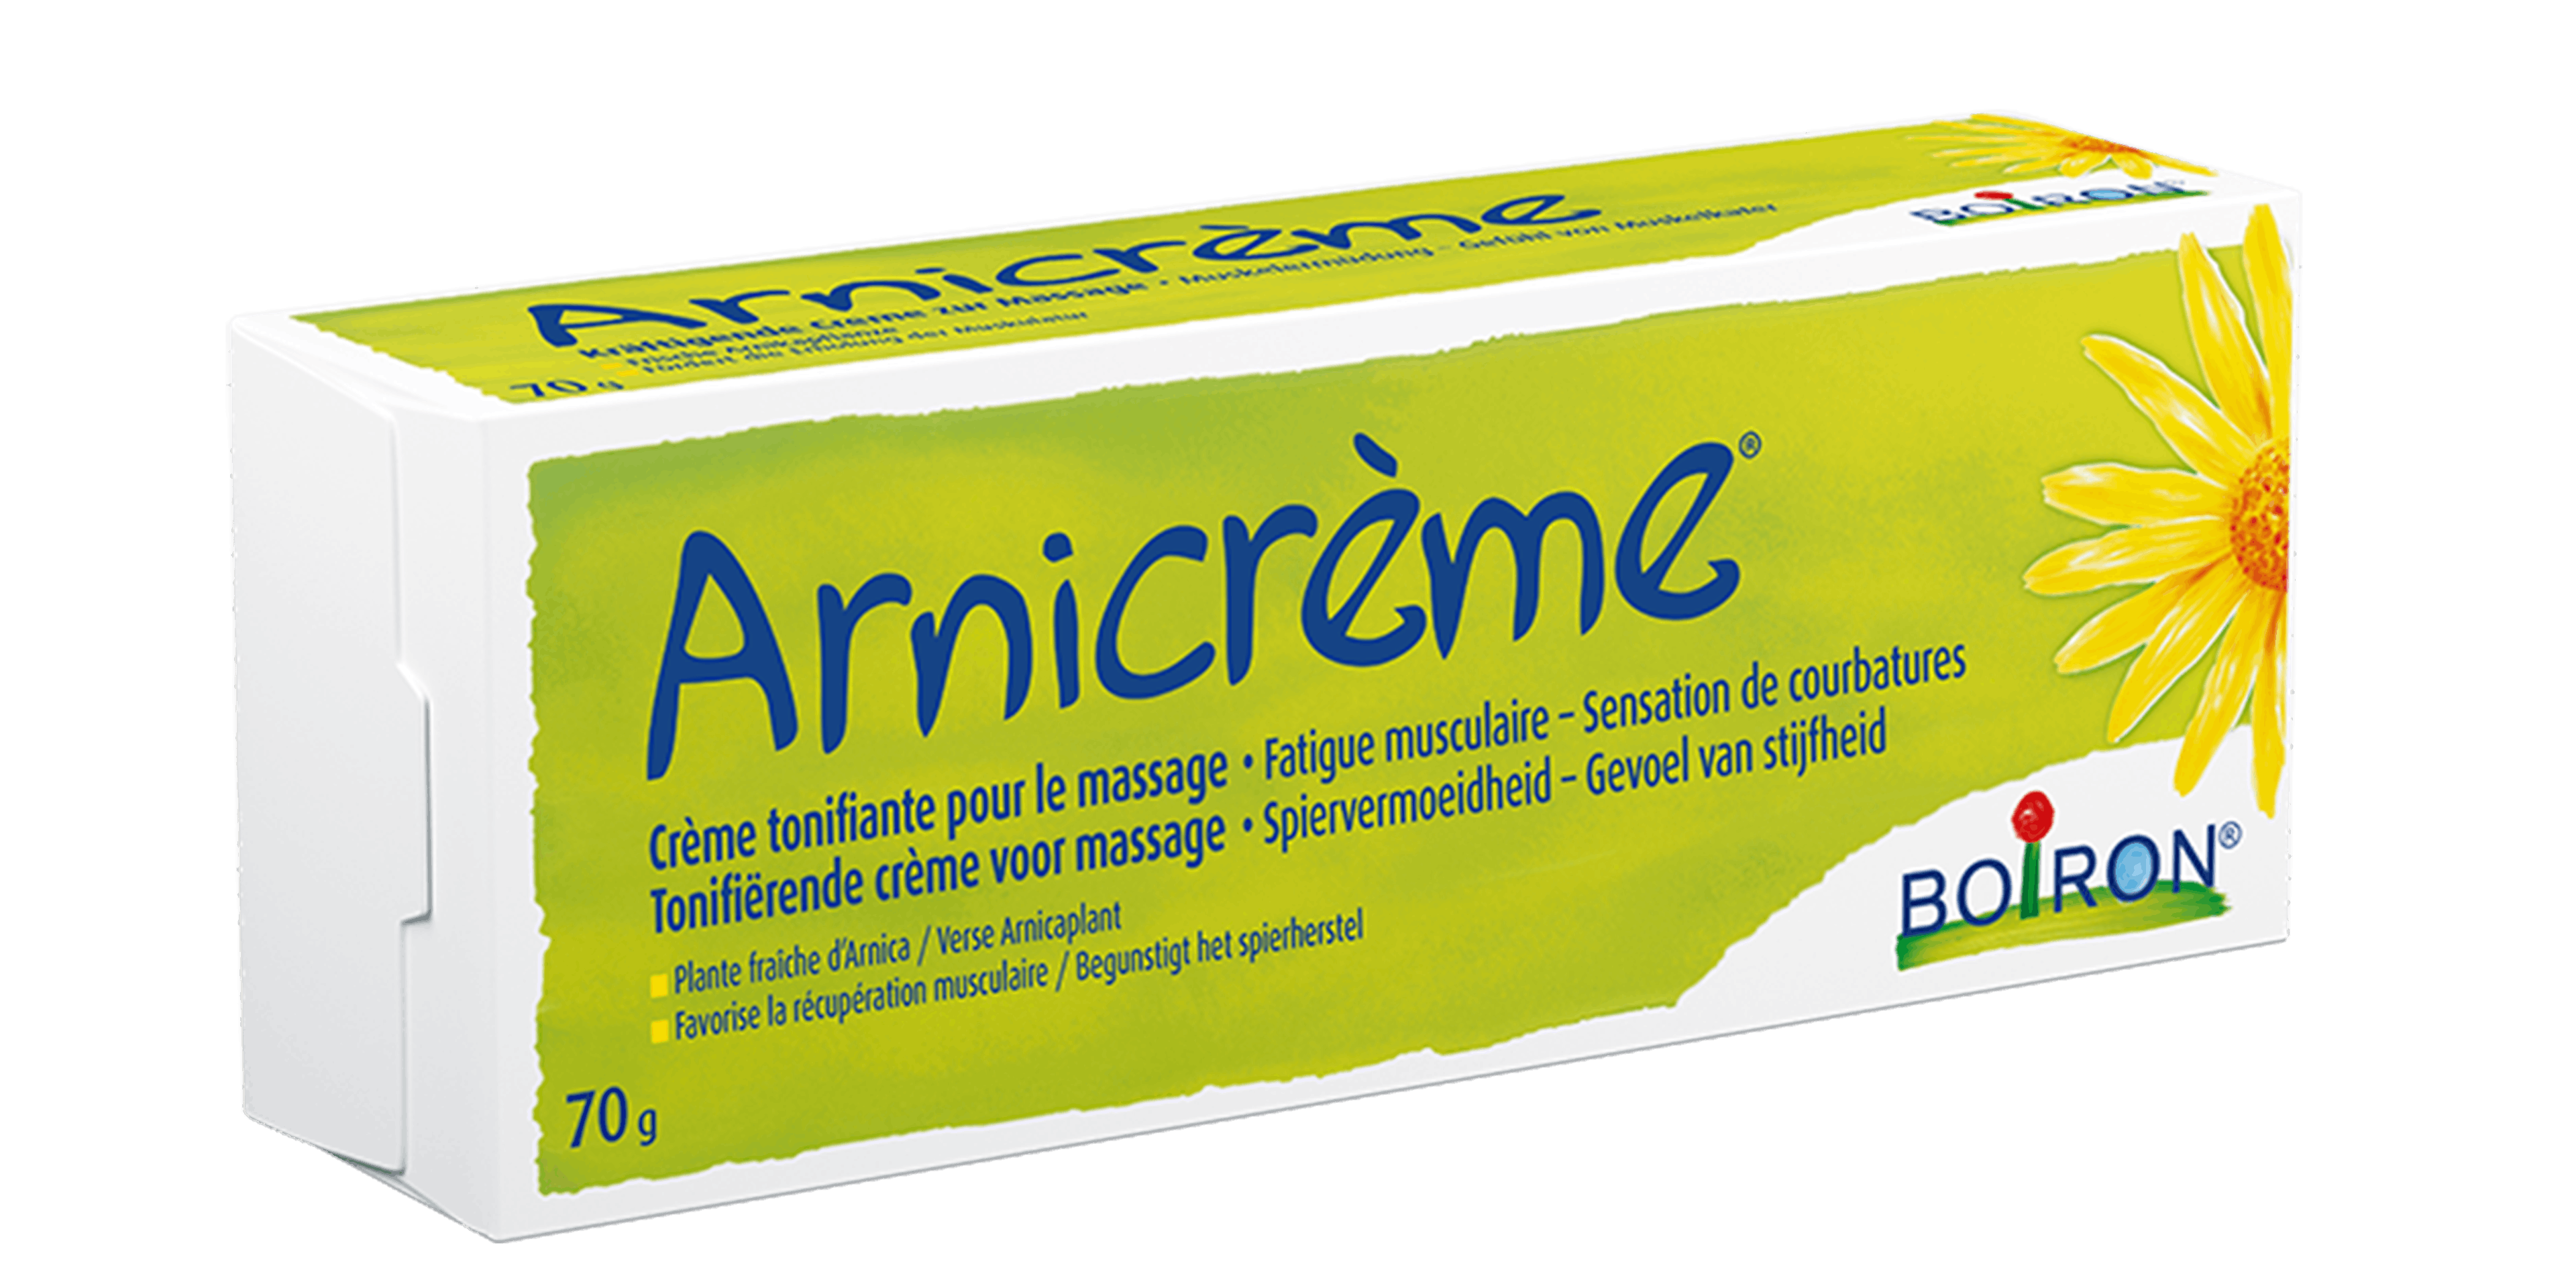 Arnicrème - onze cosmetica - spiervermoeidheid - stijfheid